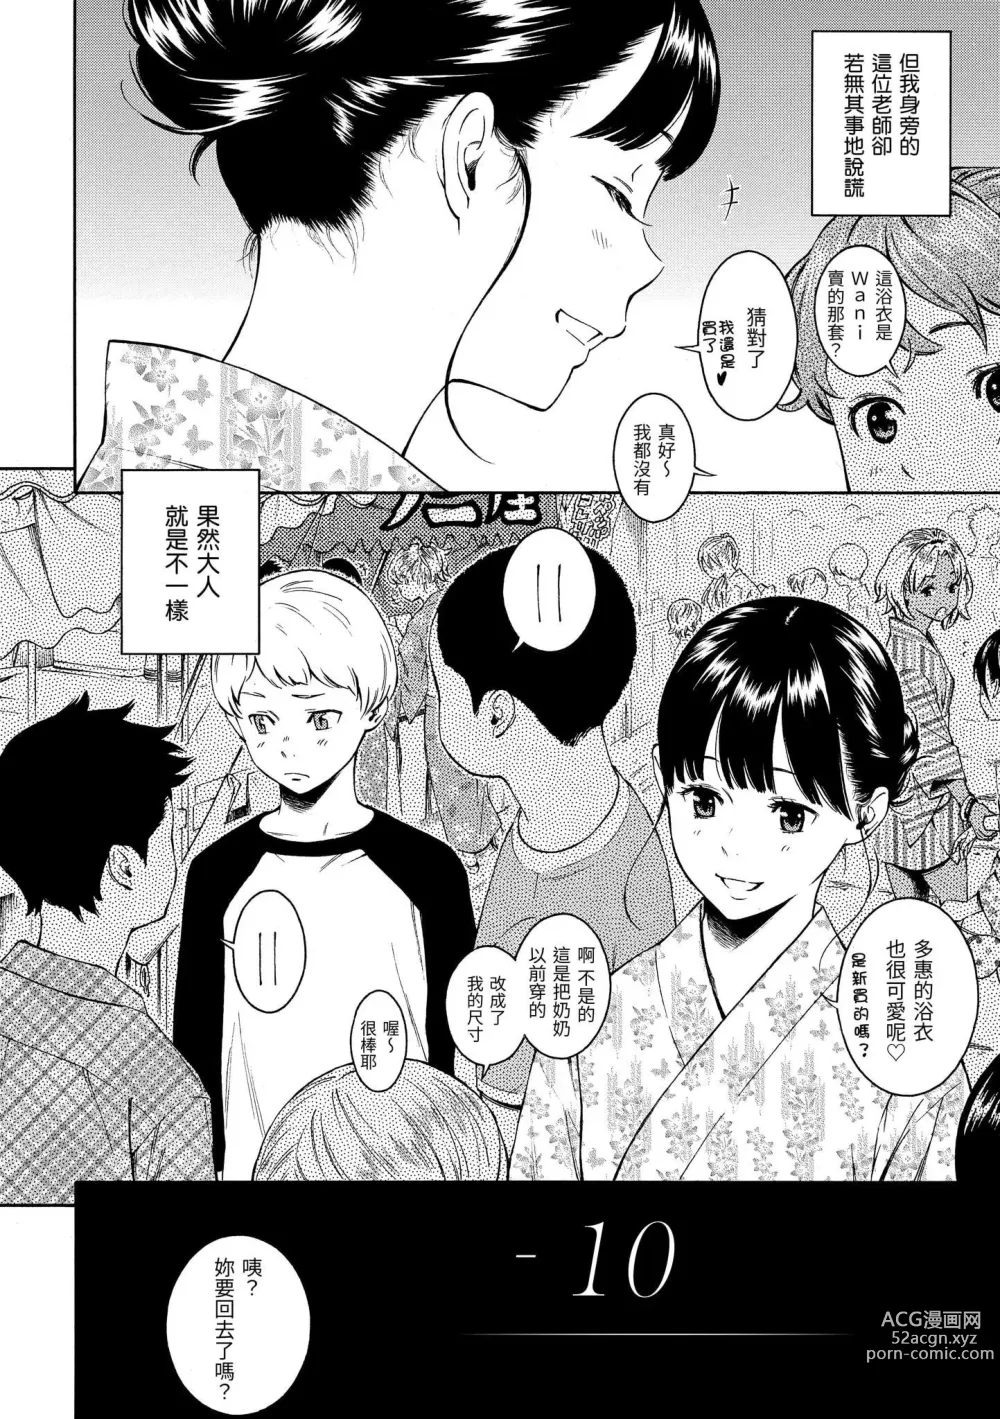 Page 7 of manga Gunjou Noise